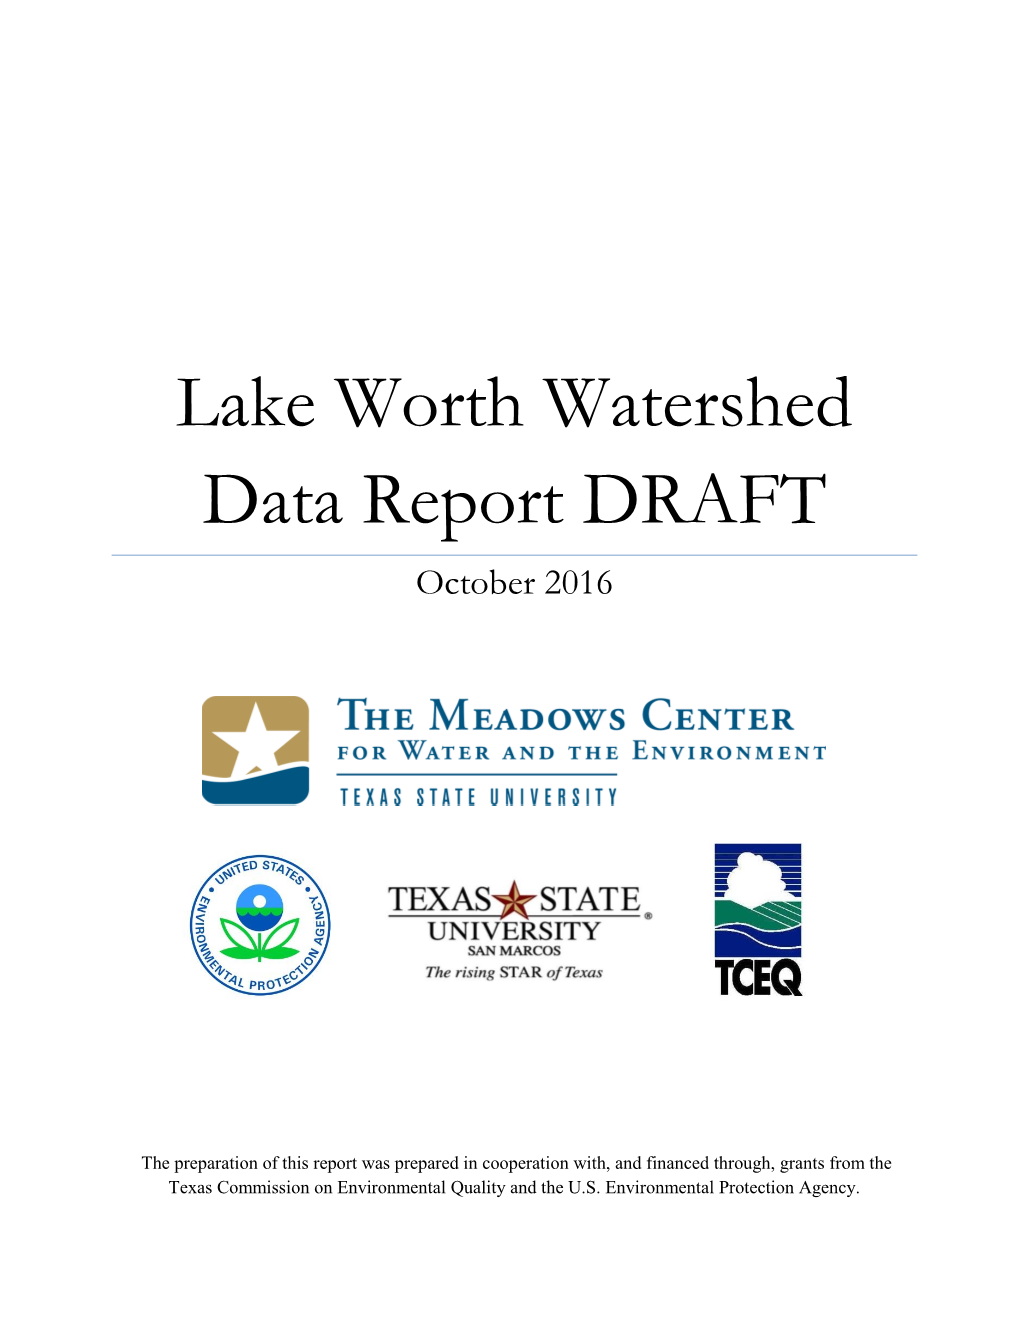 Lake Worth Watershed Data Report DRAFT October 2016